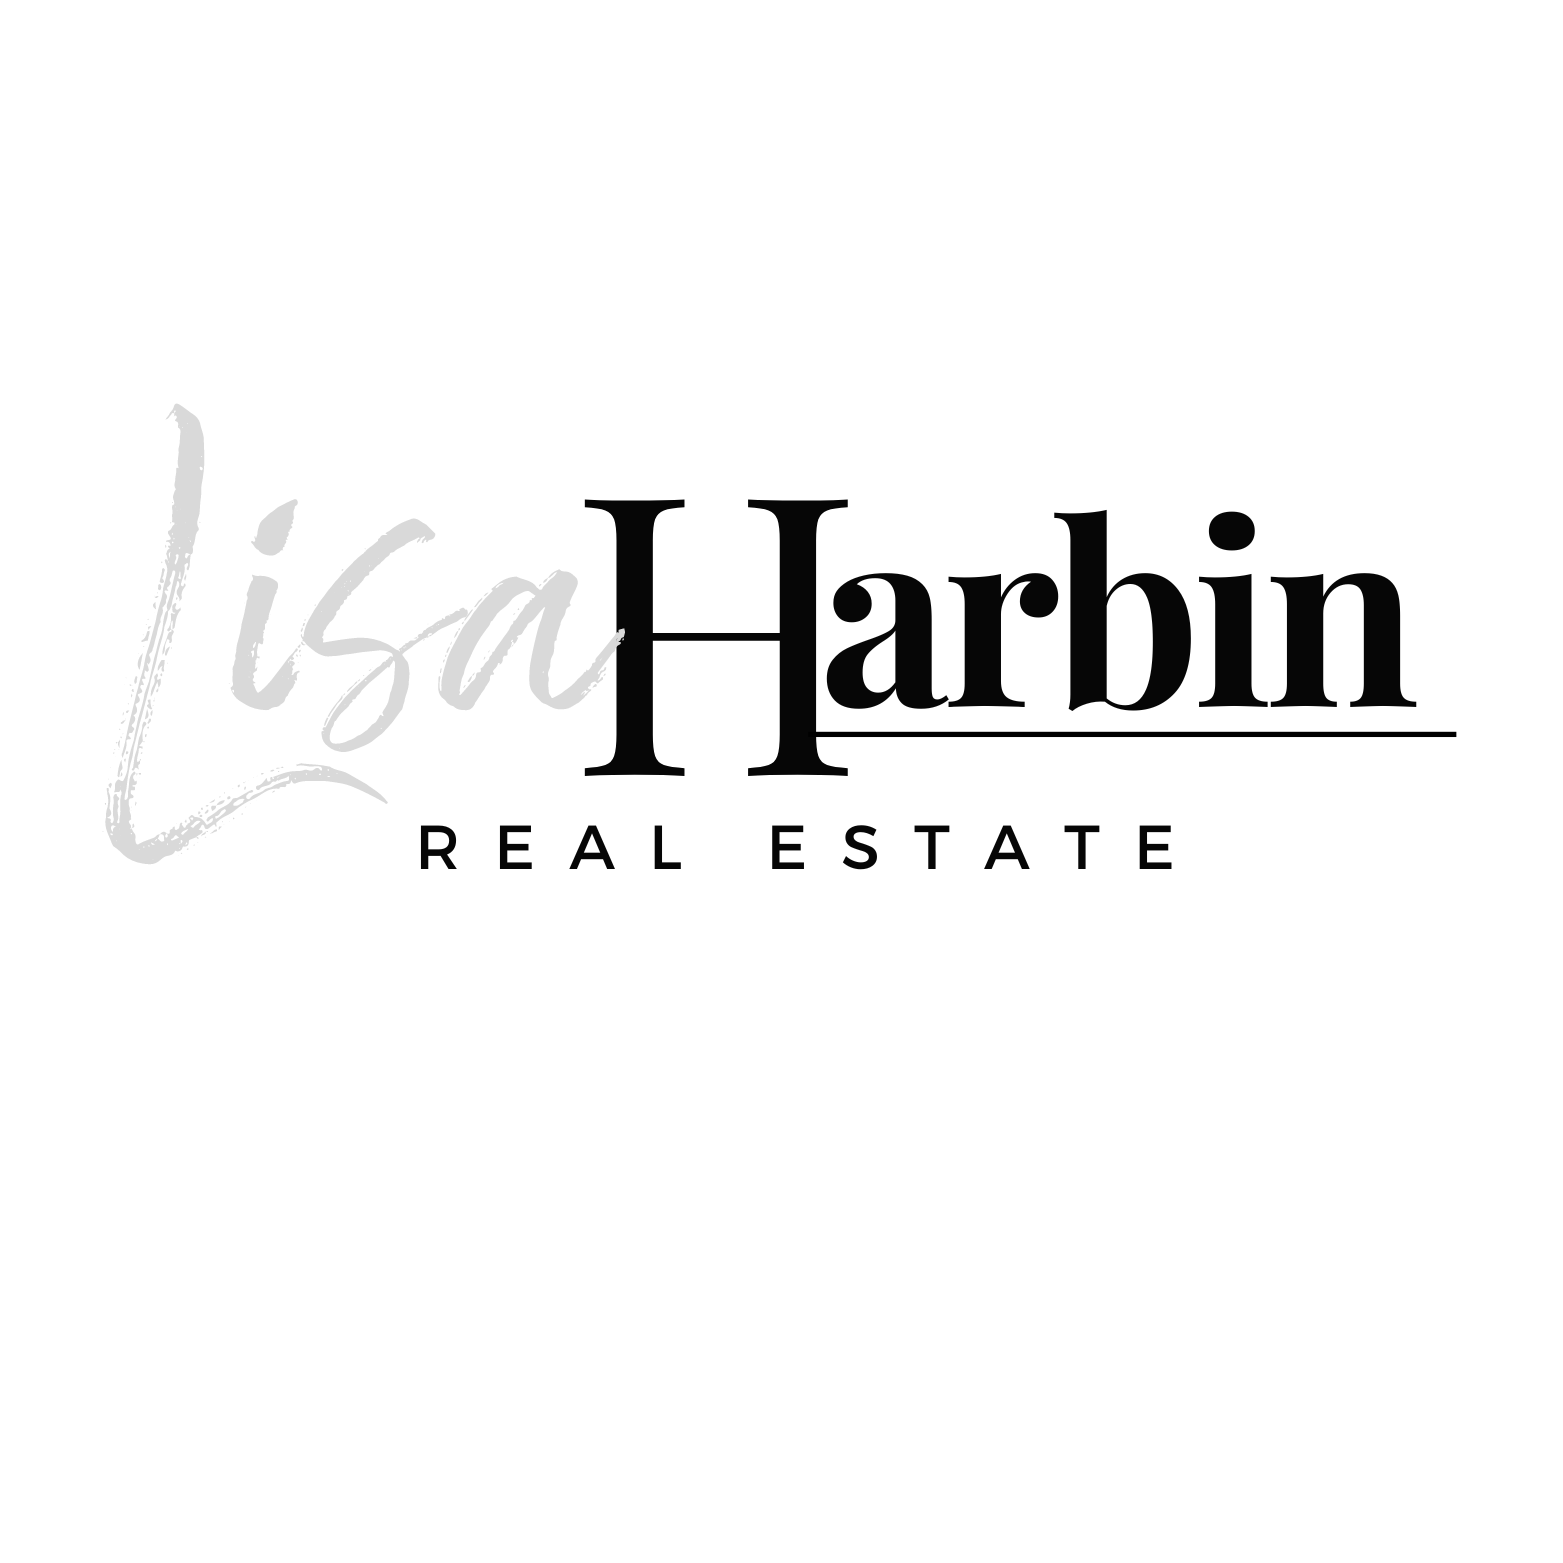 Lisa-Harbin-Logos-MASTER.png